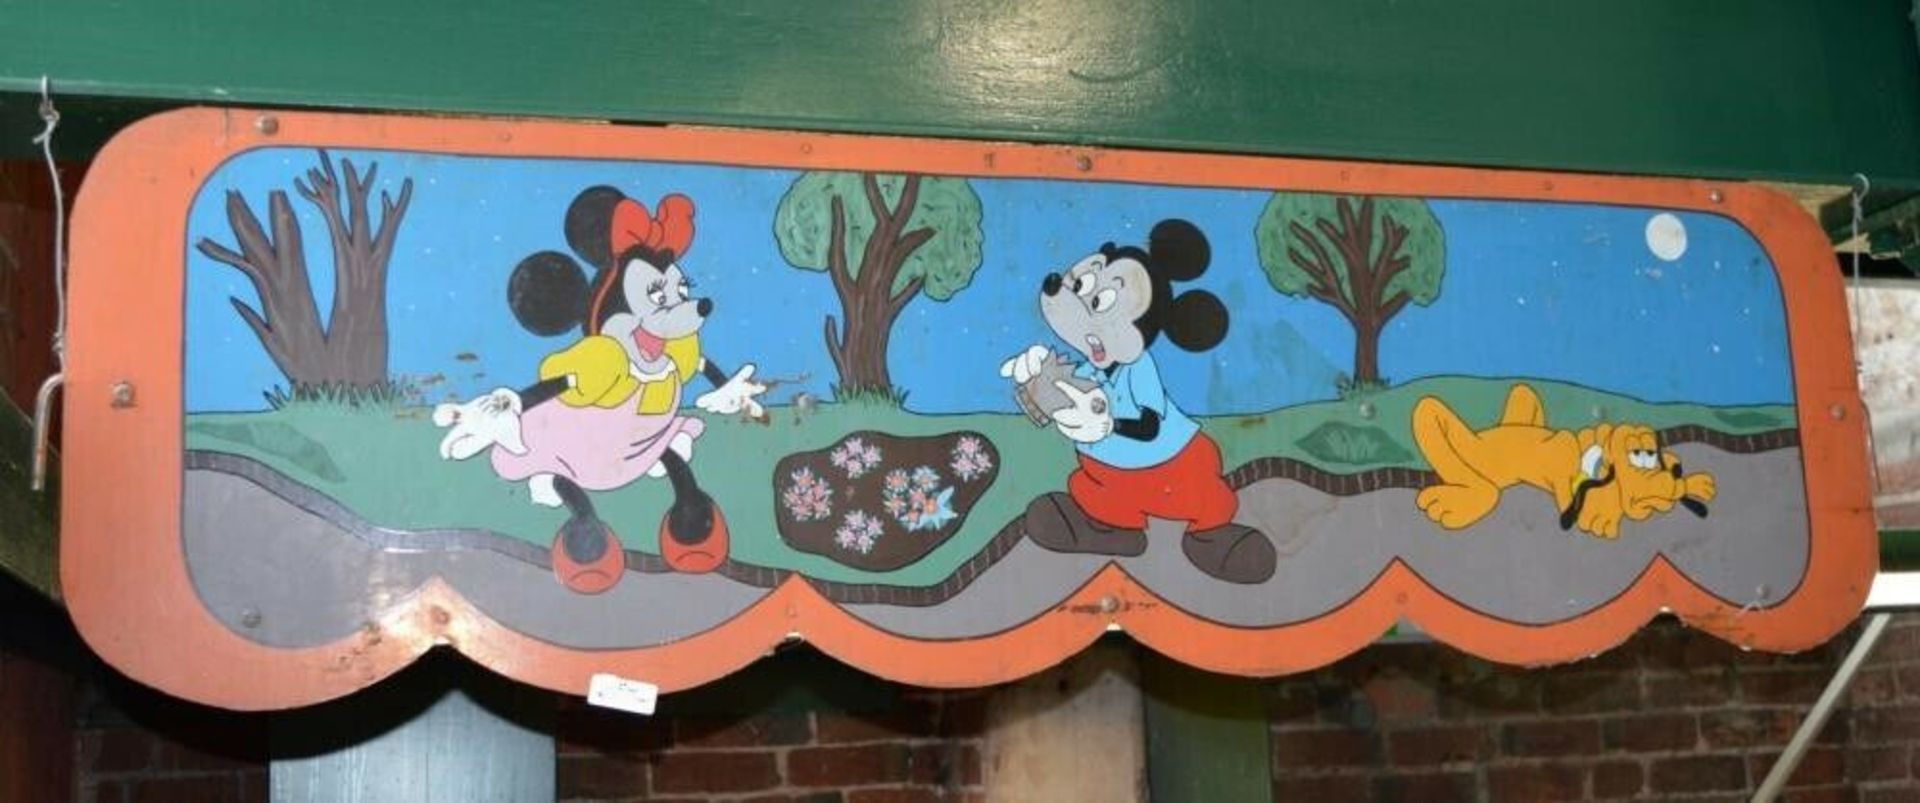 7 x Vintage Fairground Ride Fence Panels - Hand Painted Disneyland Artwork - With Braced Backs and - Image 4 of 10